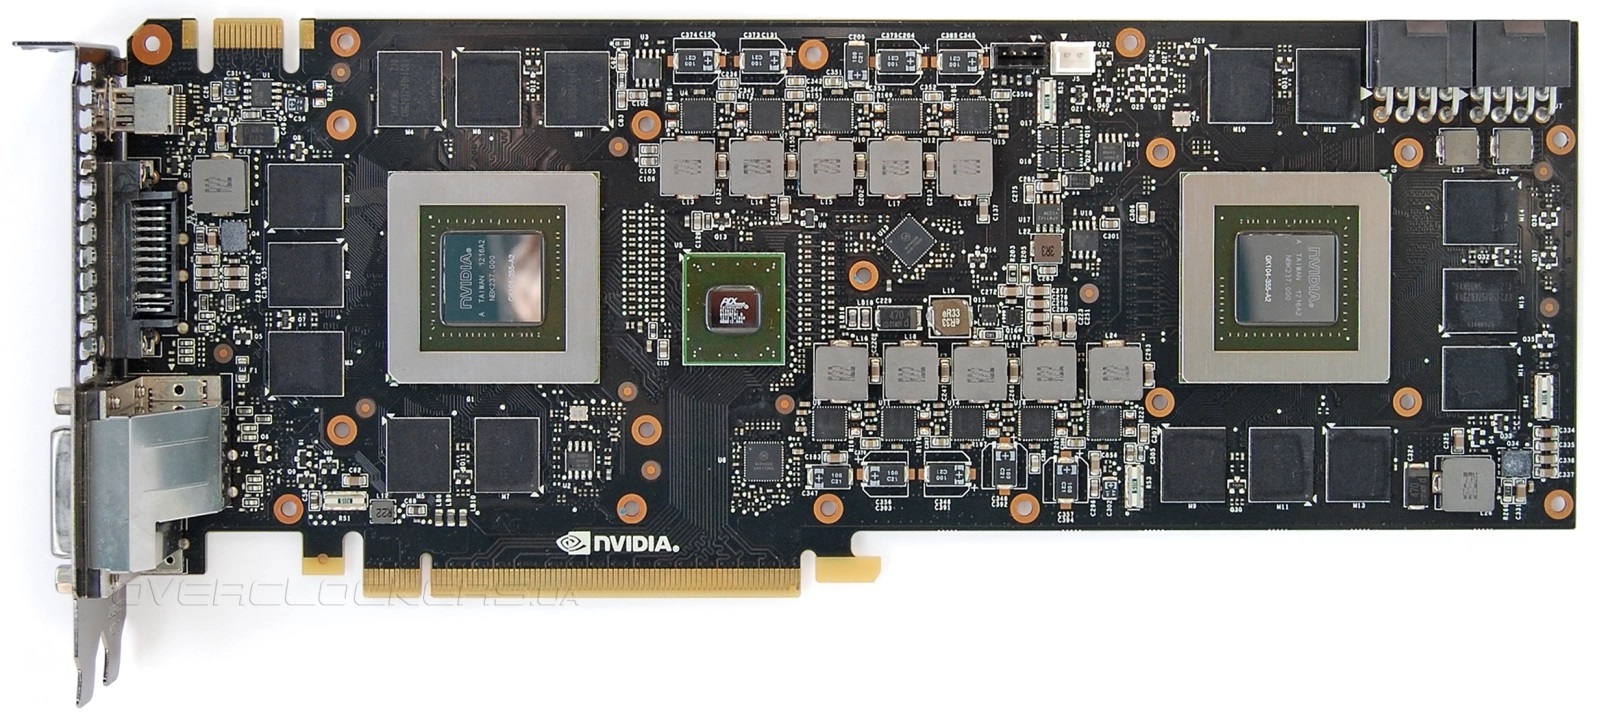 NVidia GeForce GTX 690